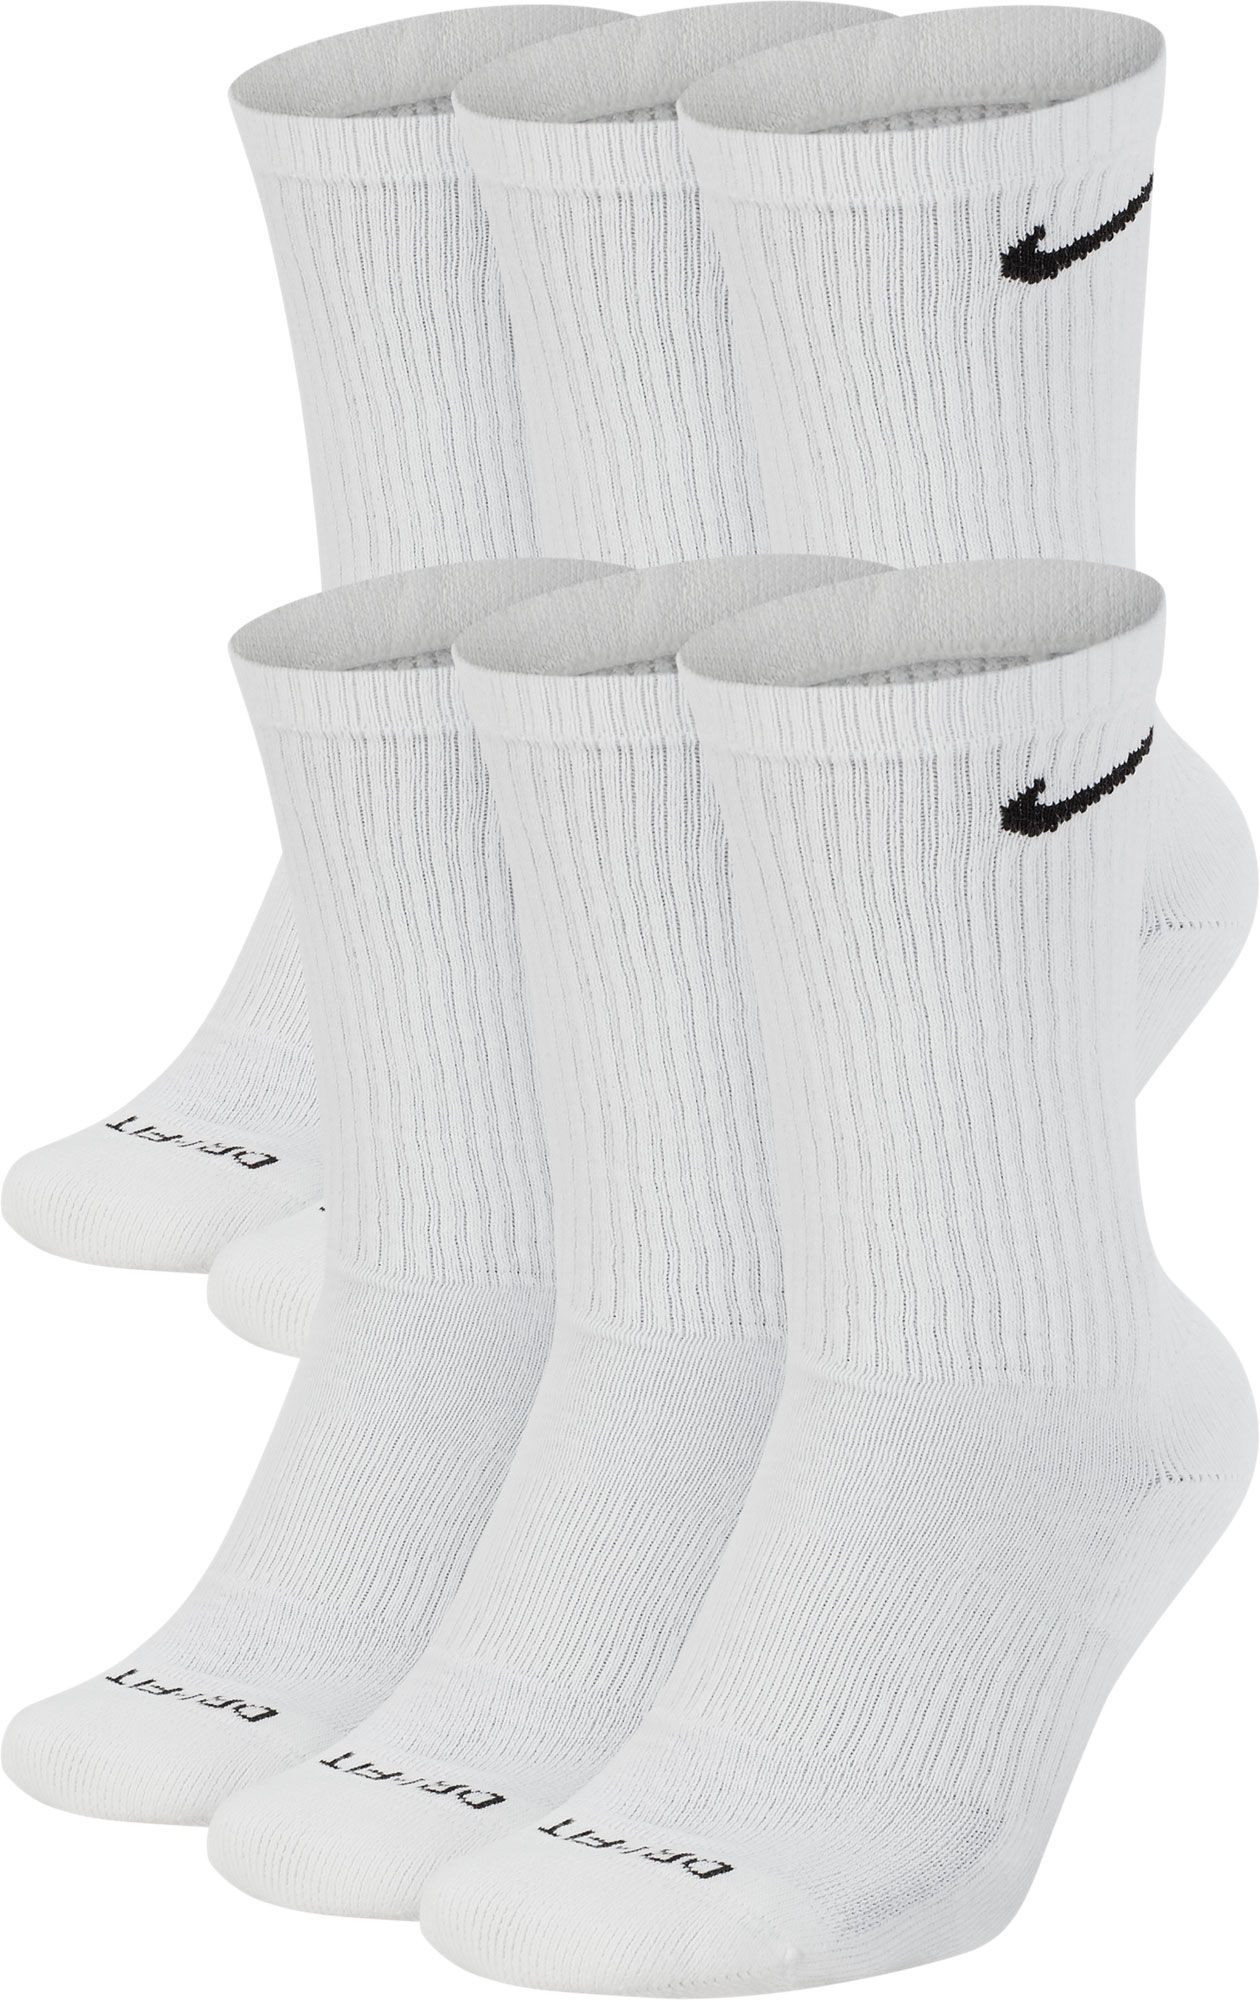 nike crew white socks